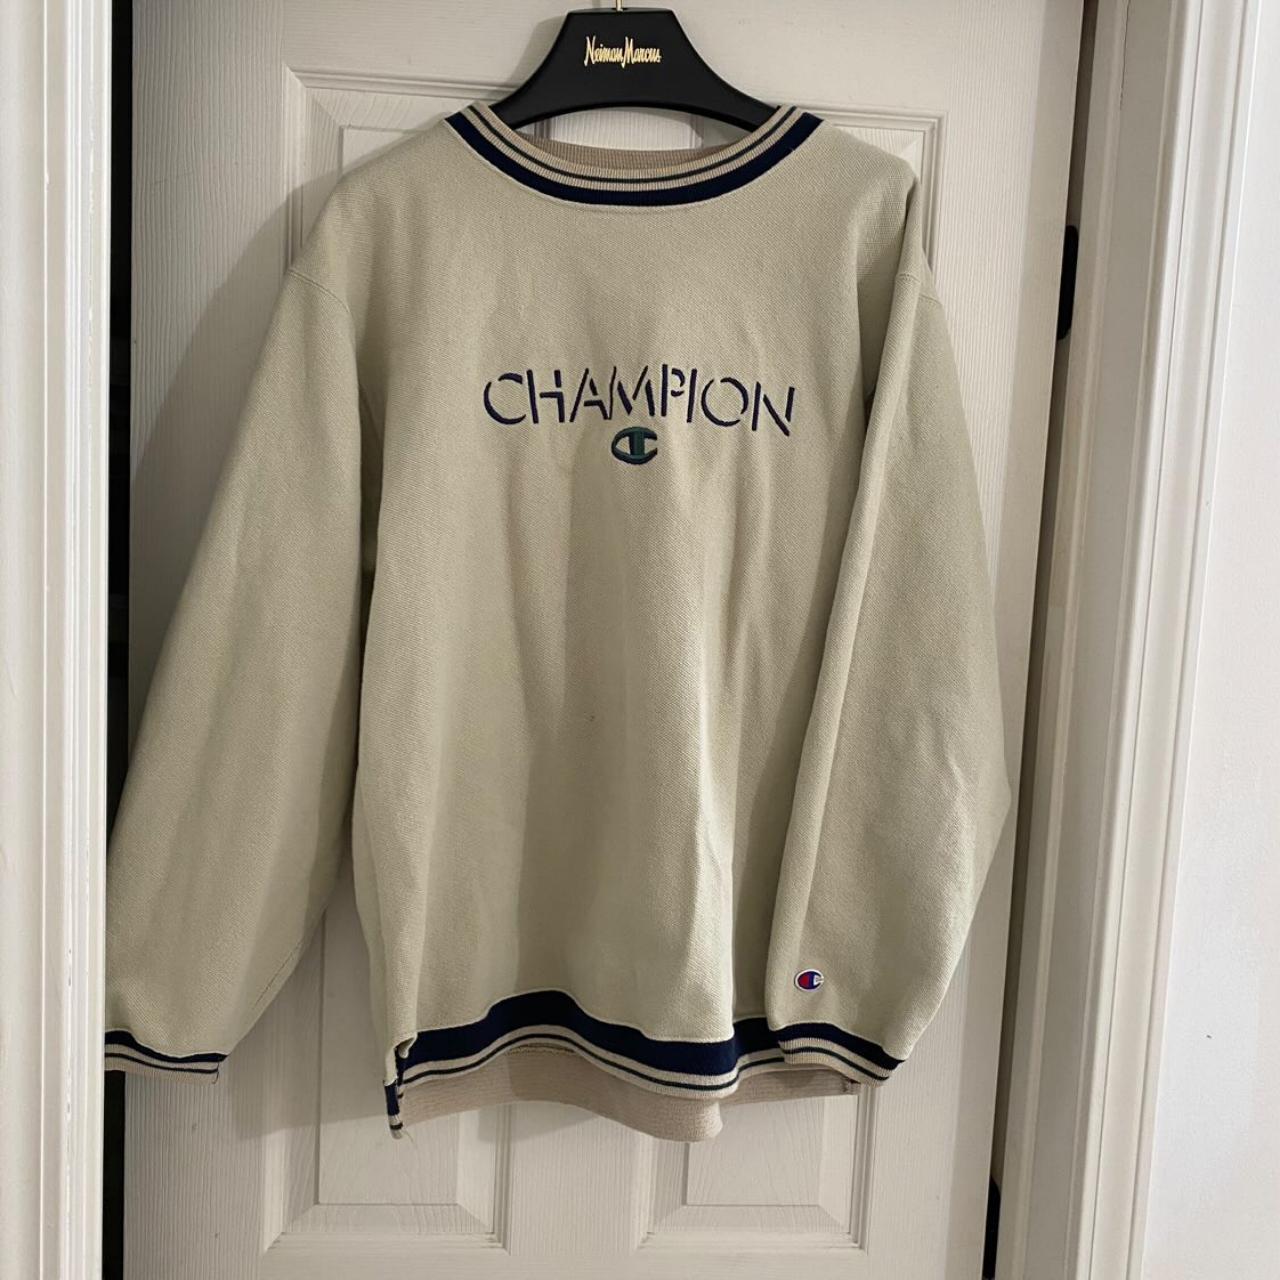 Vintage 90s Rare Champion Sweatshirt ♡... - Depop